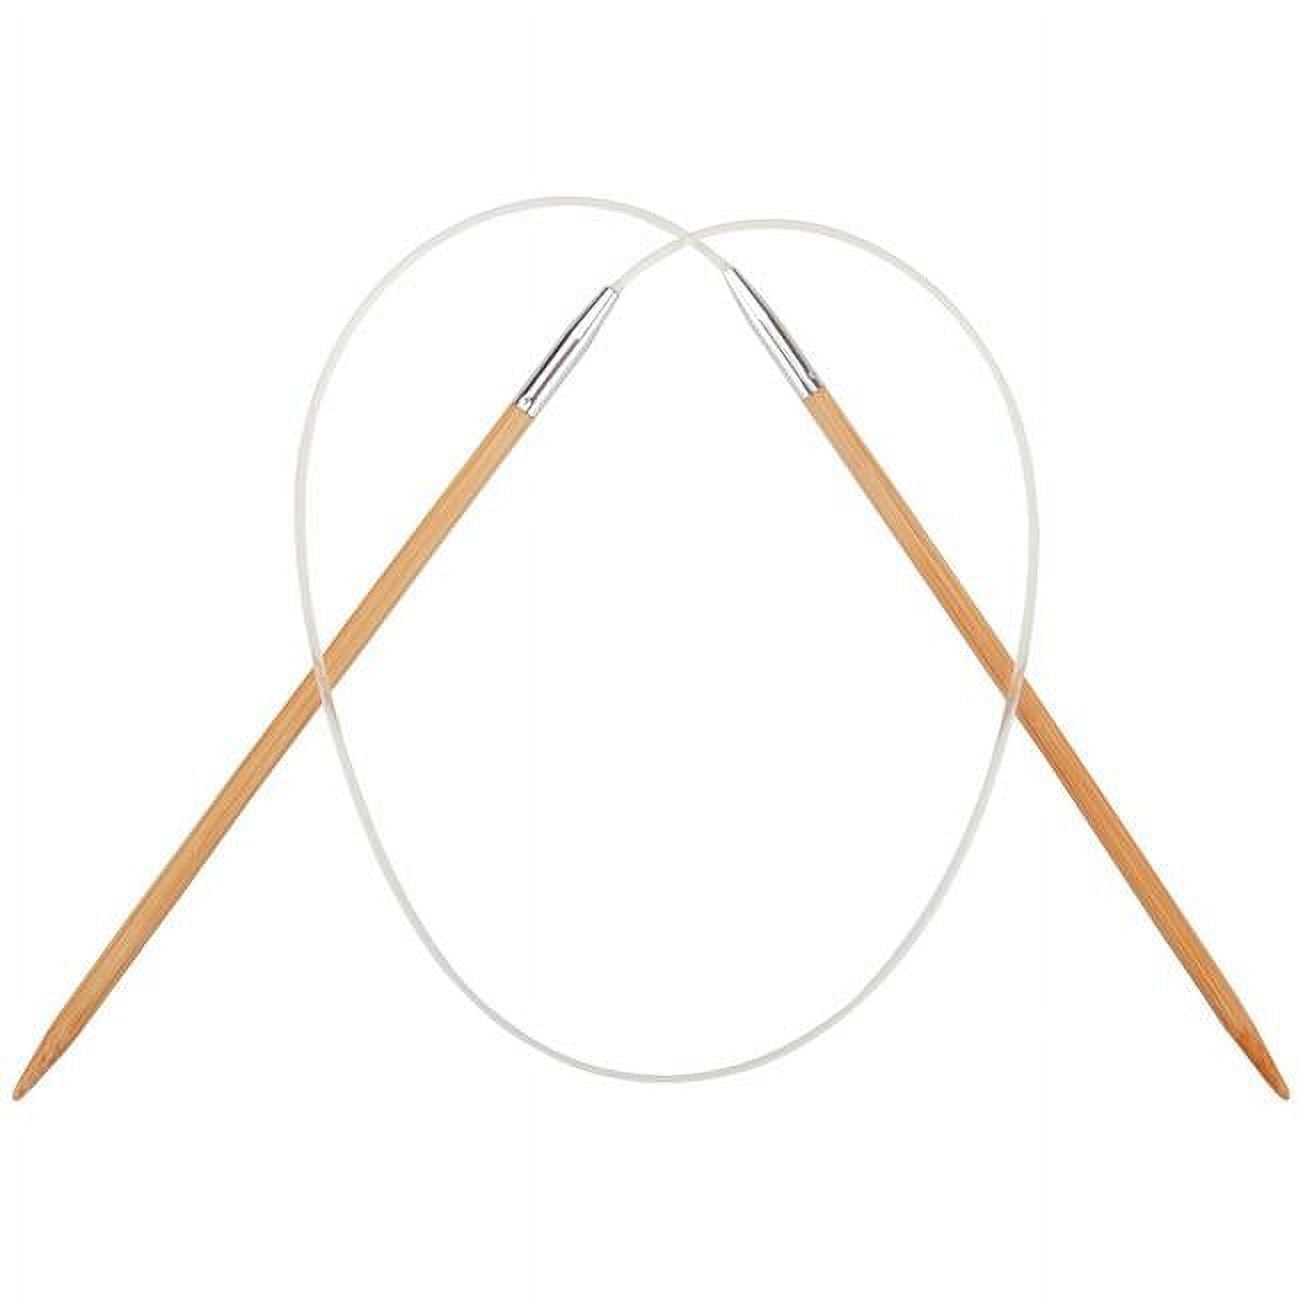 ChiaoGoo 2024-35 24 in. Bamboo Circular Knitting Needles - Size 35